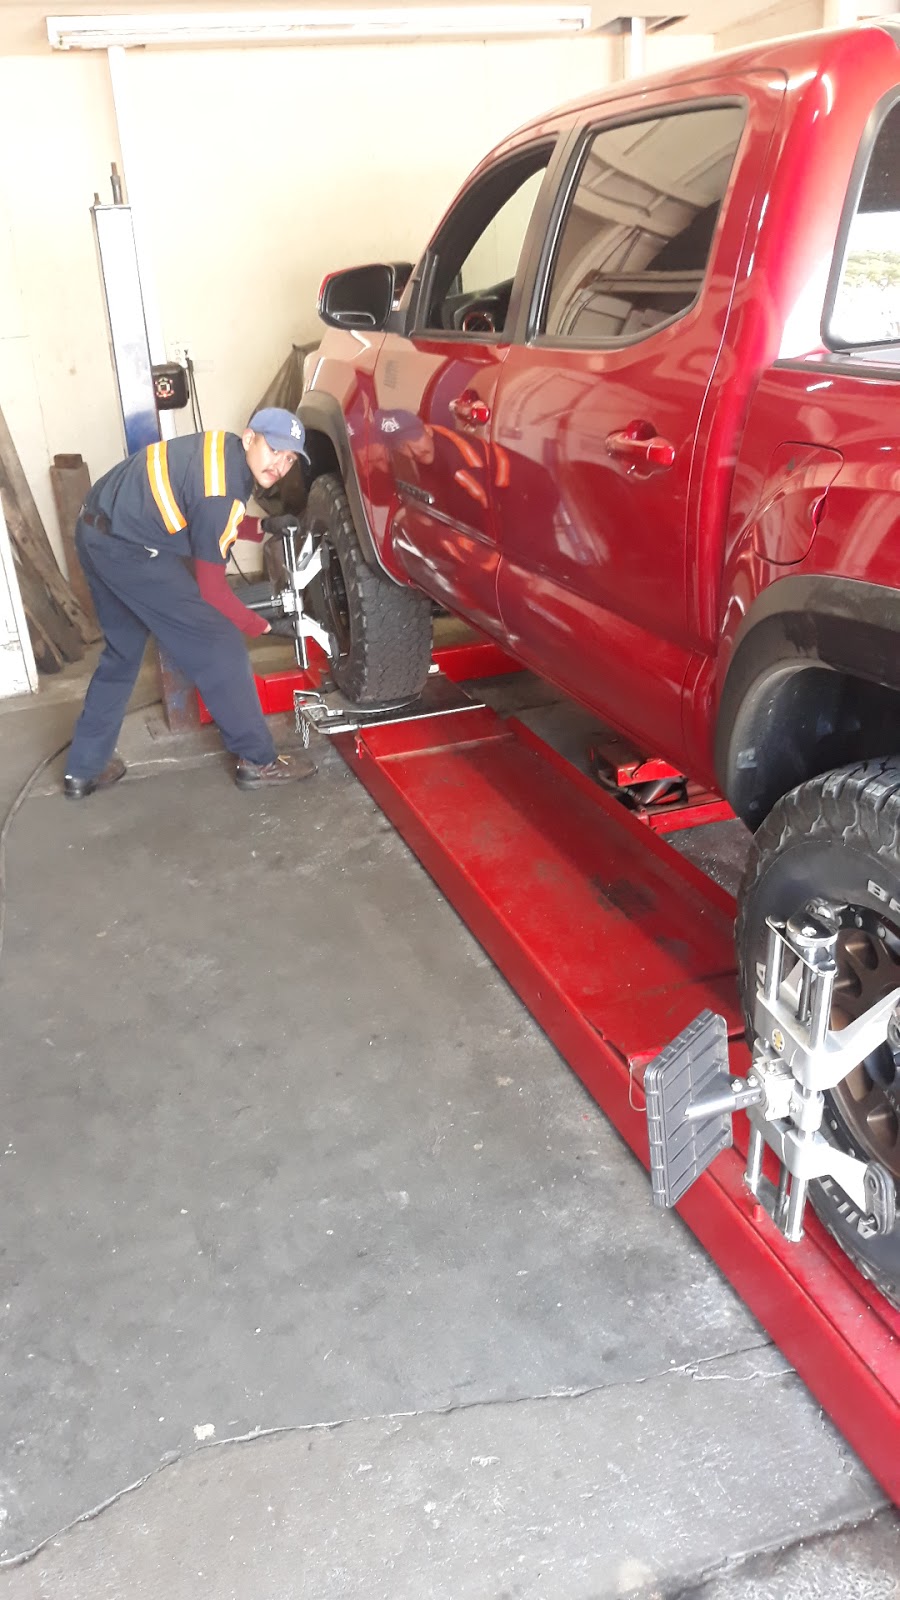 Baja Tires & Repair Services | 11953 S Inglewood Ave, Hawthorne, CA 90250 | Phone: (310) 675-7488